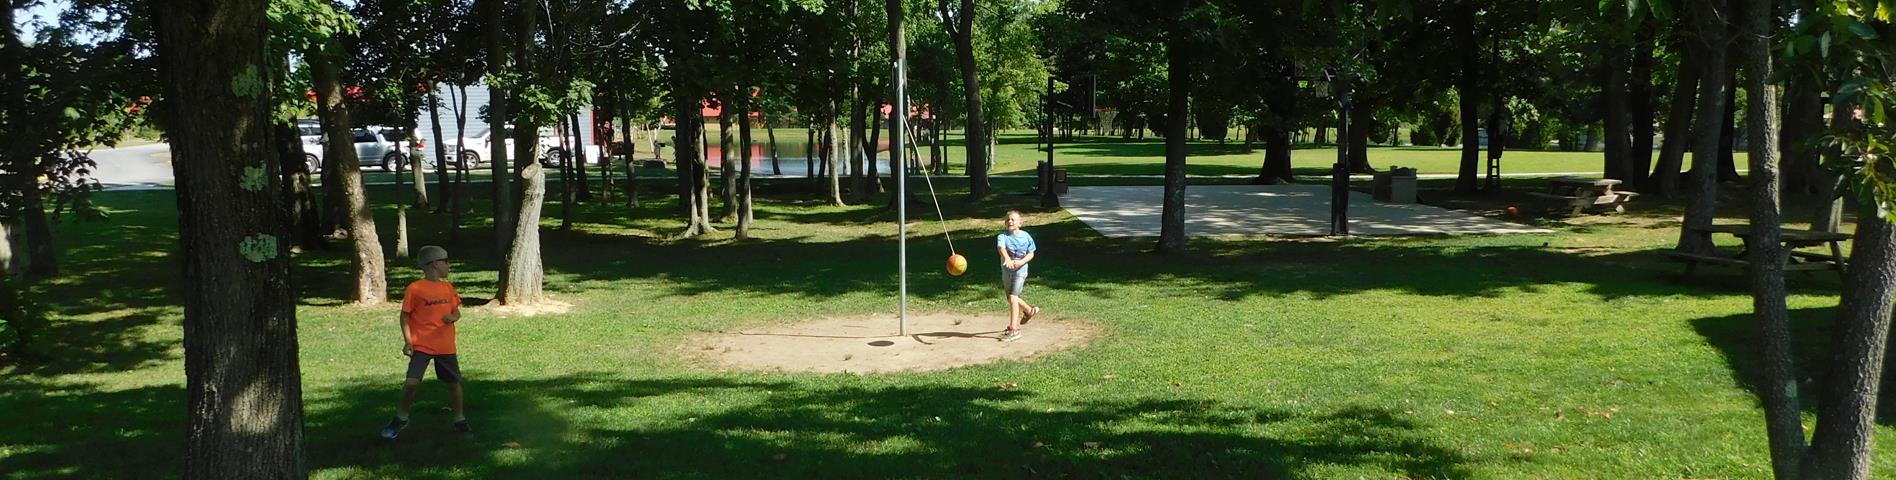 children-playing-tether-ball.jpg